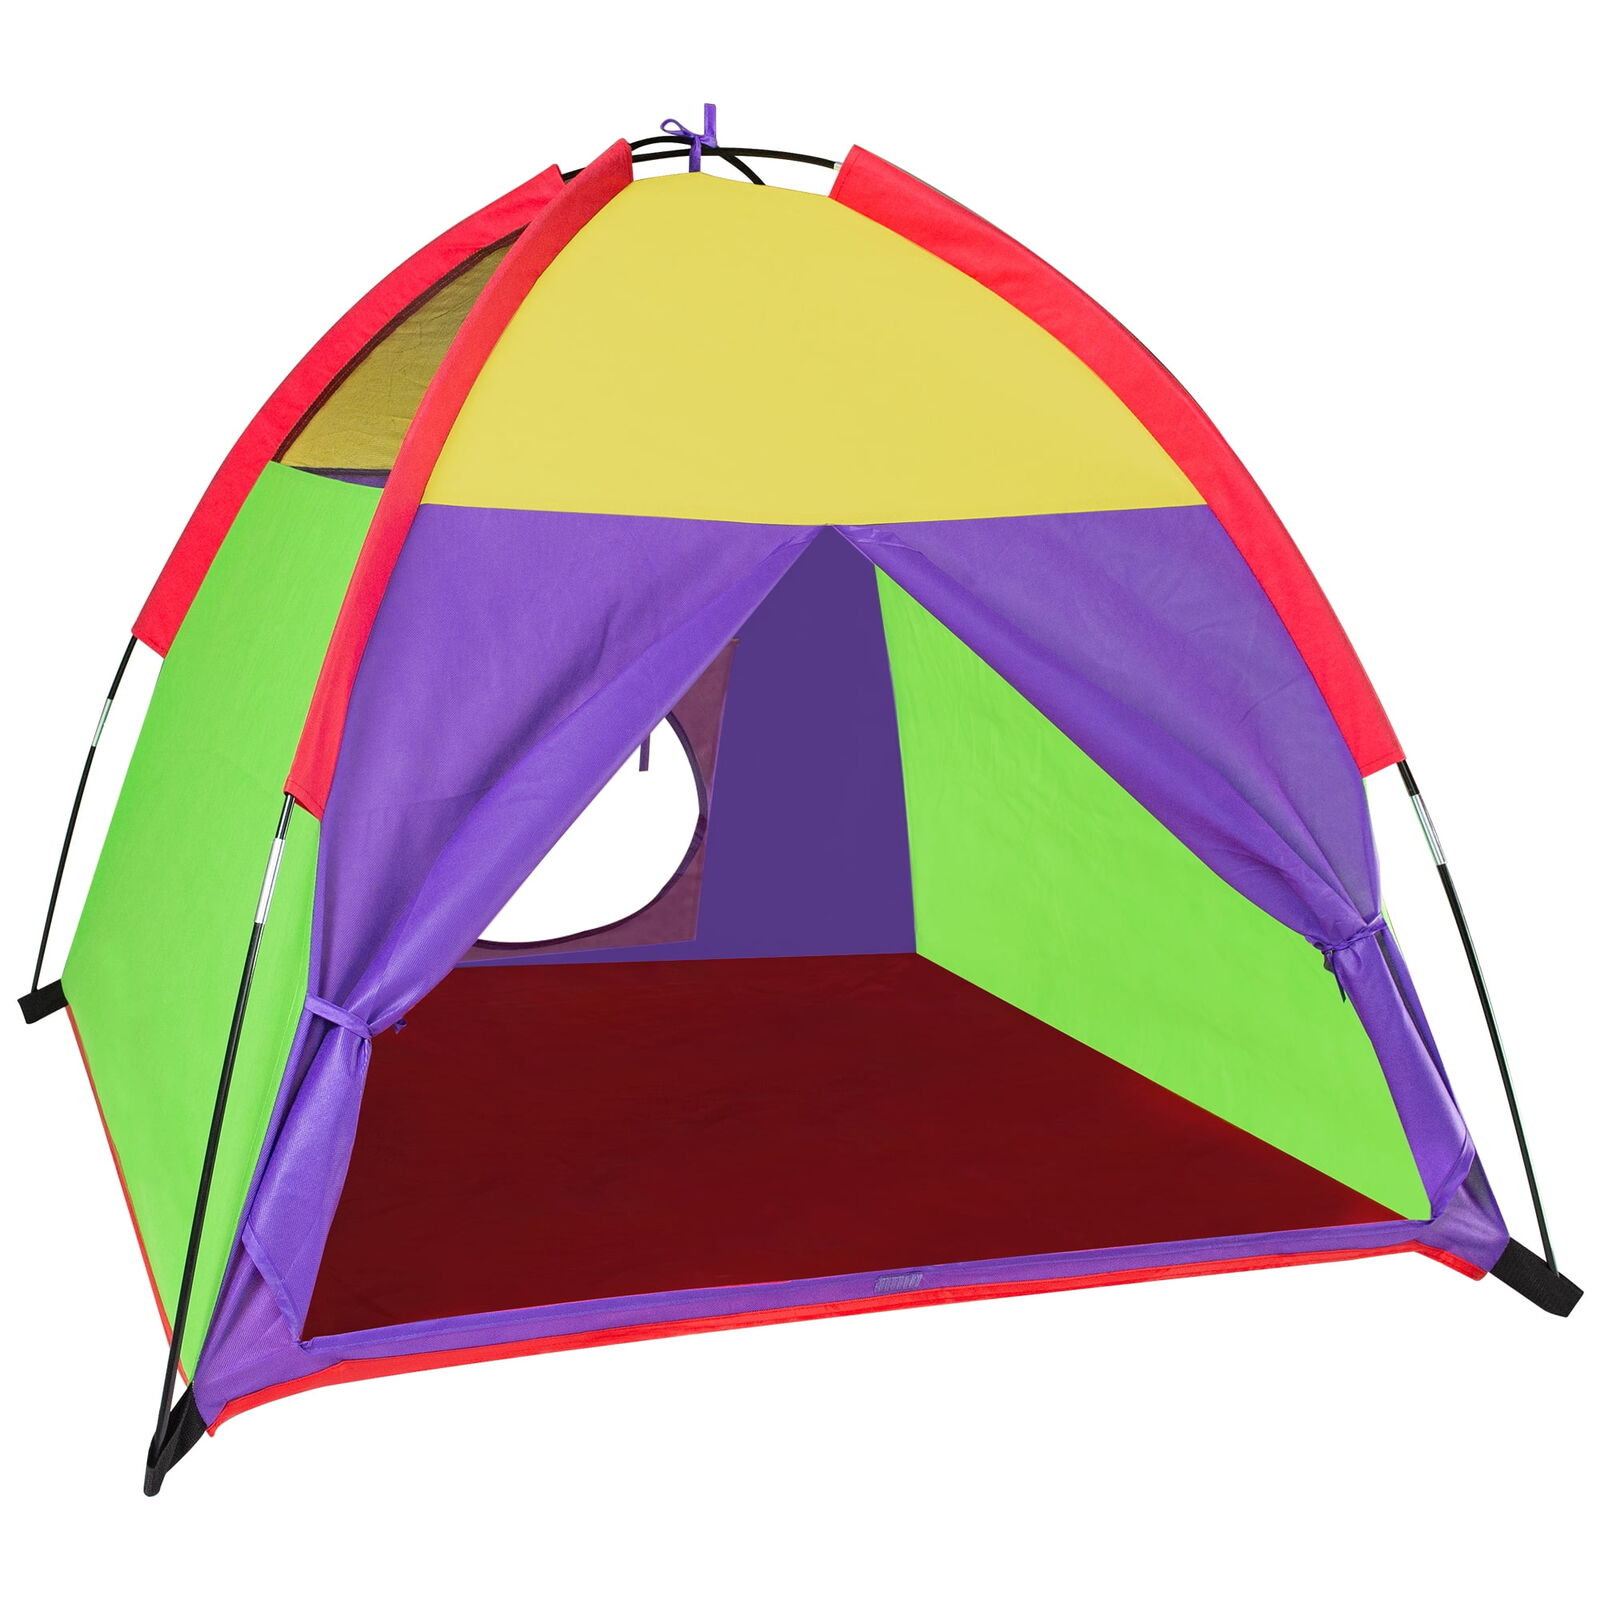 Alvantor Childrens Tent Camping Playhouse Indoor Outdoor Boys Girls Toys